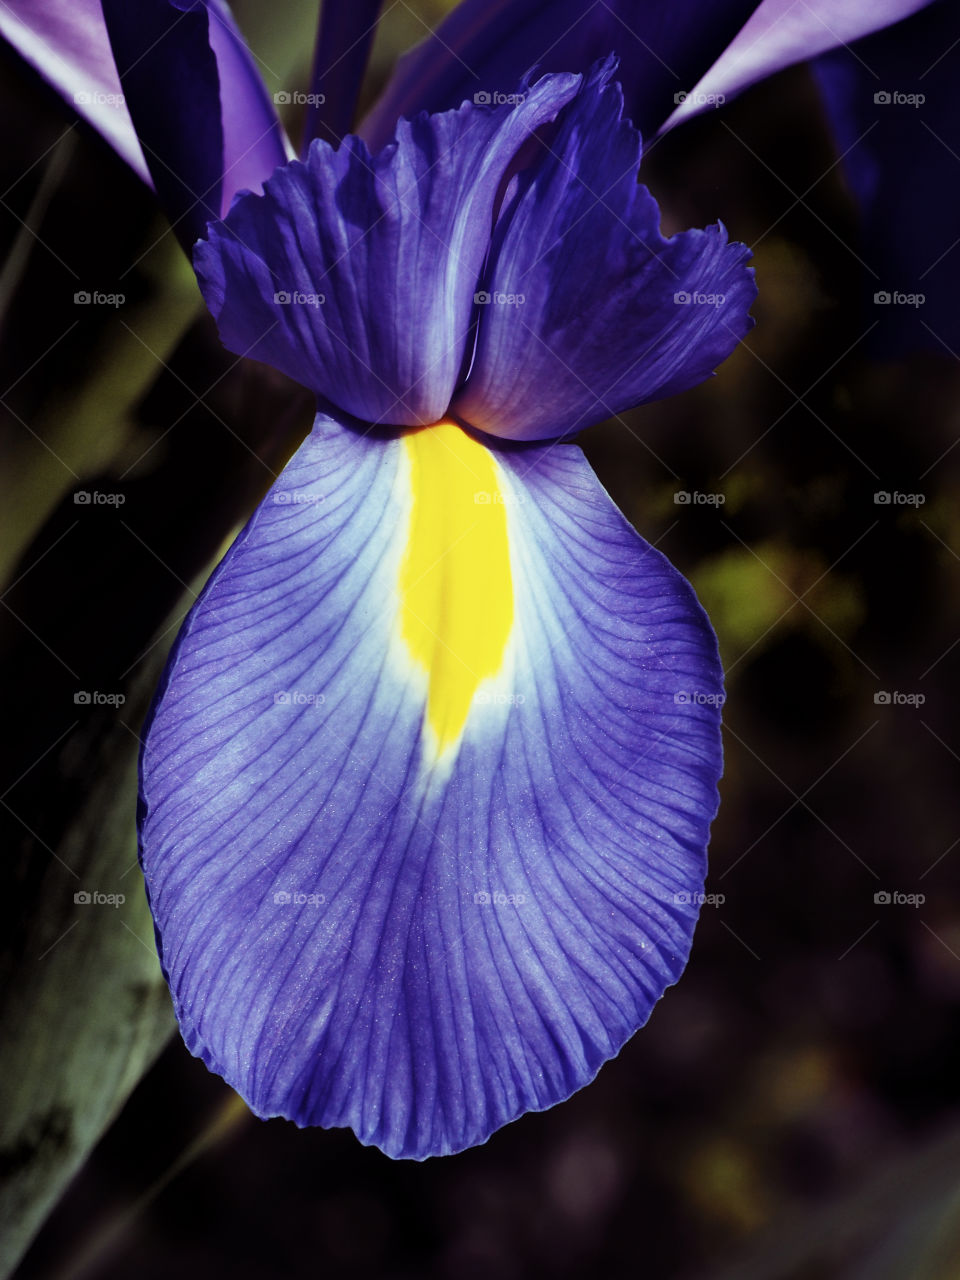 Iris flower close up 